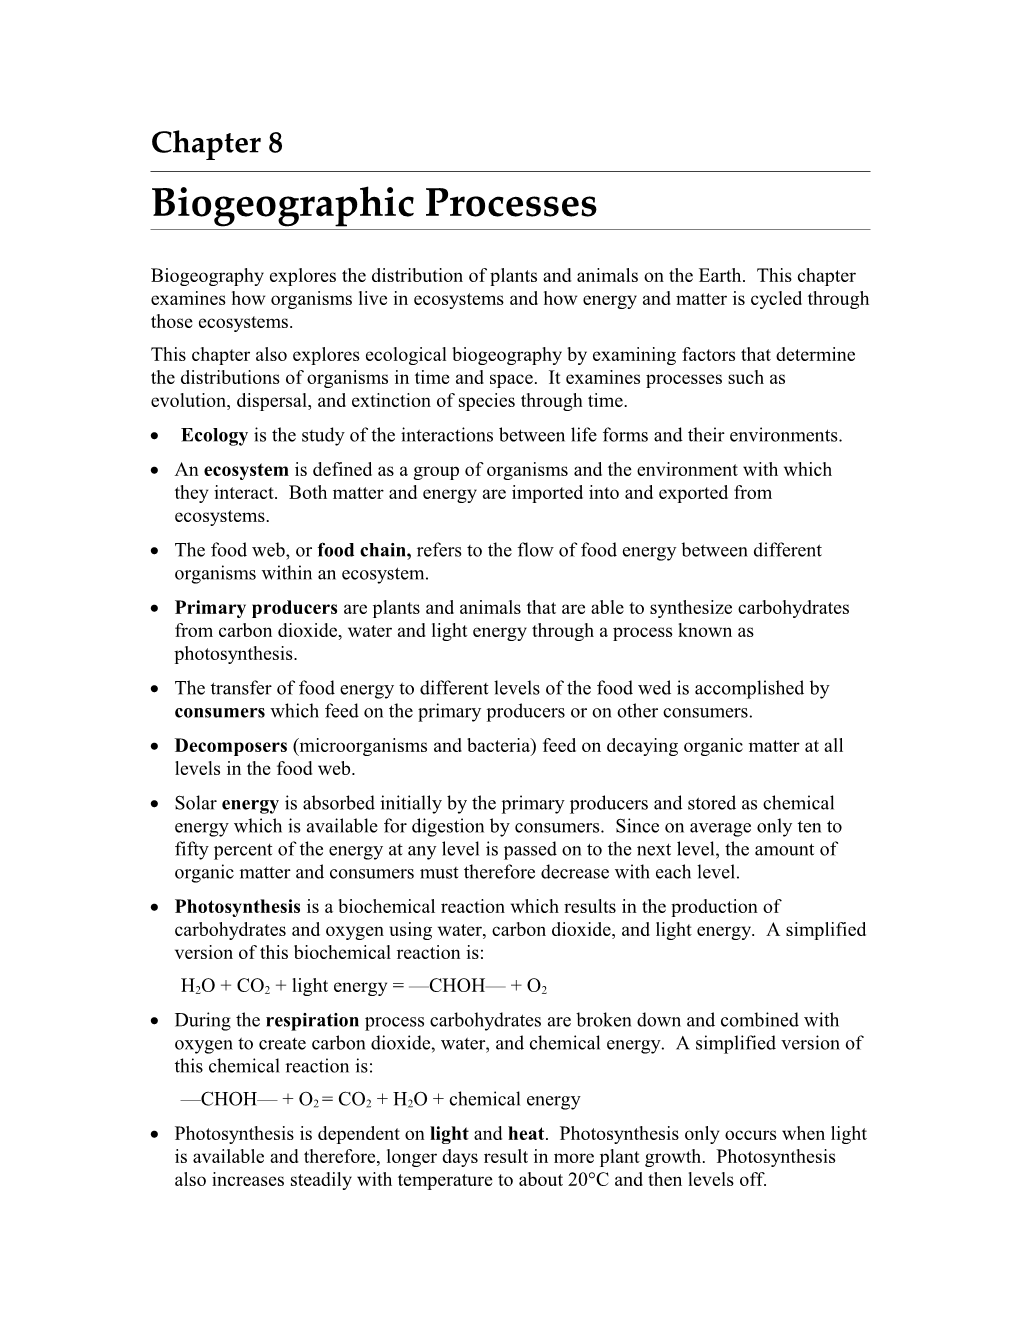 Biogeographic Processes